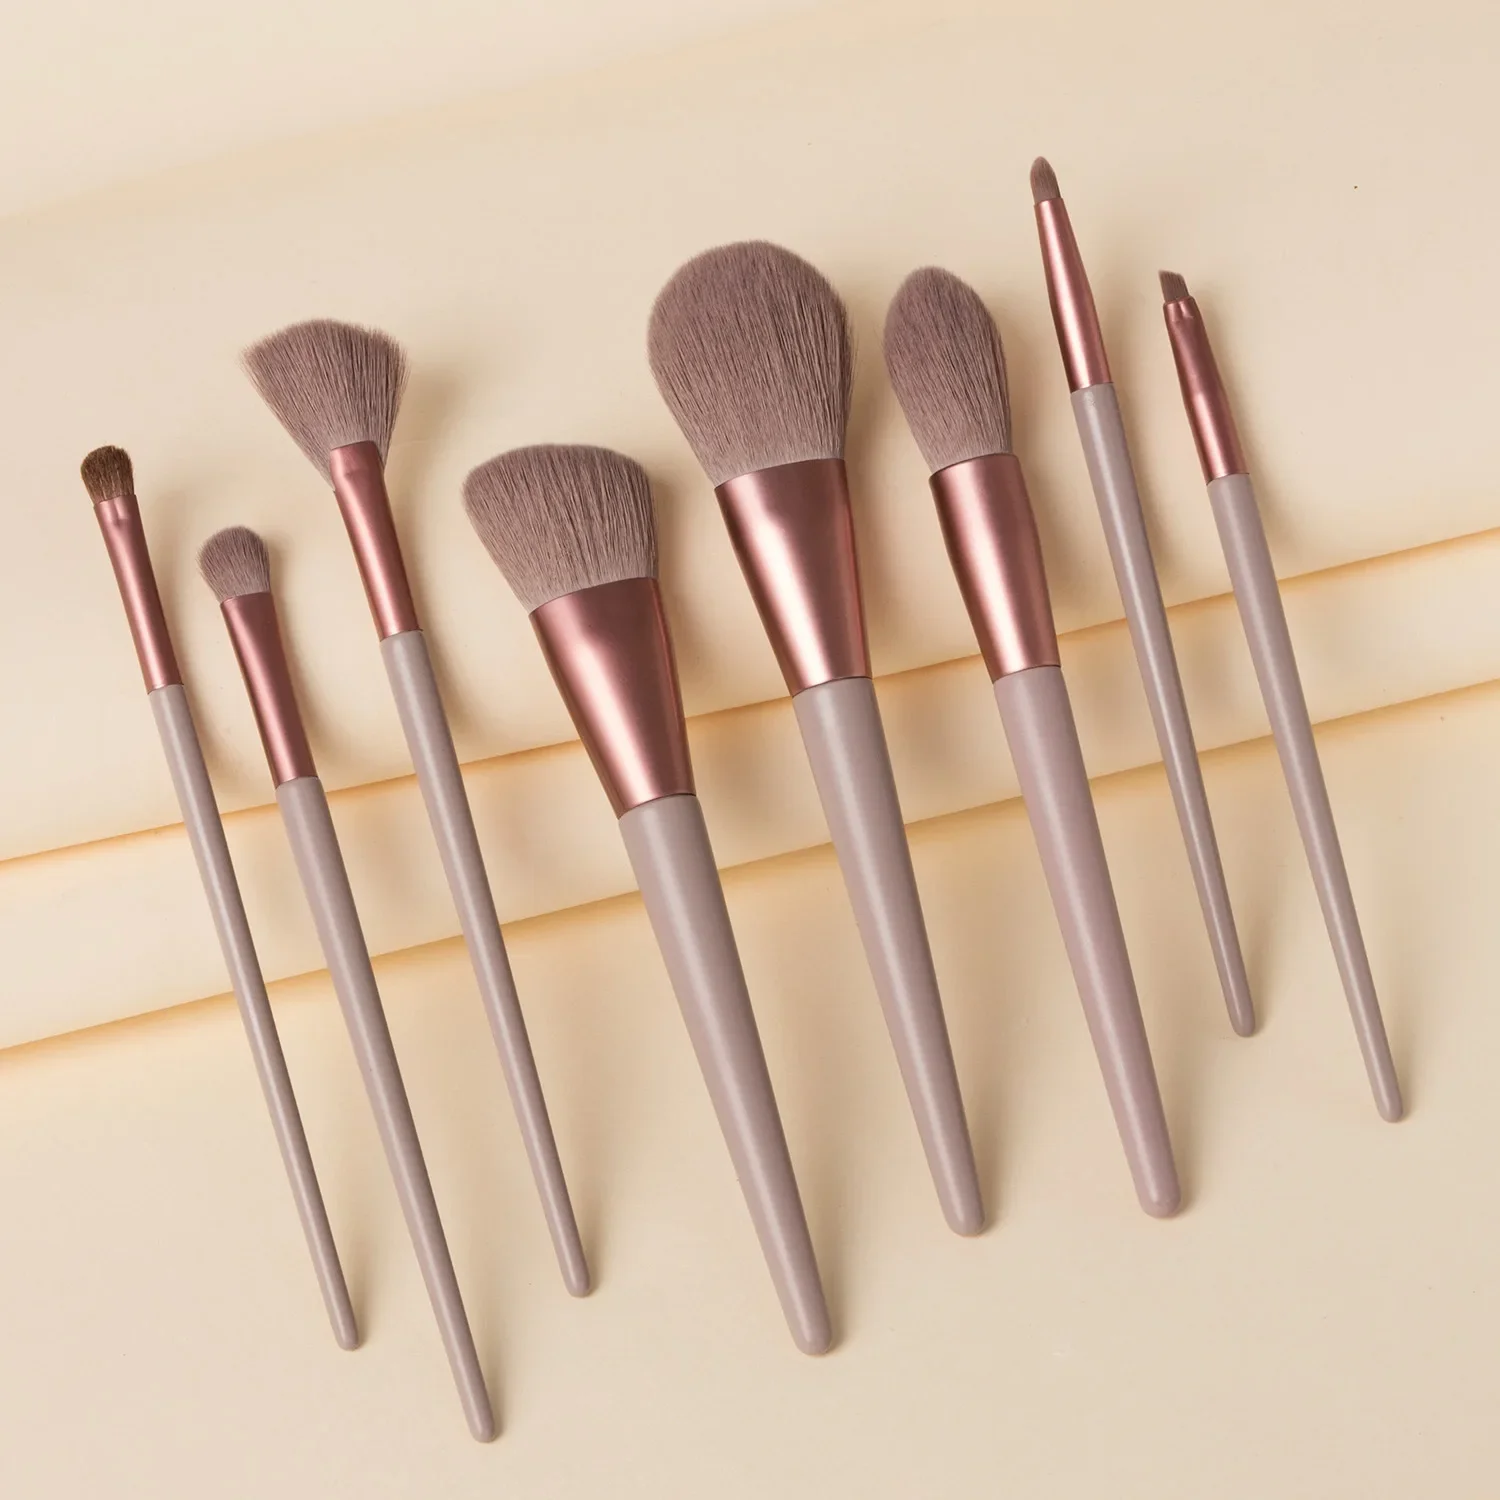 

8pcs Makeup Brush Super Soft Fiber Make Up Brushes Set Foundation Powder Blush Blending Eyeshadow Brush Cosmetic Tools